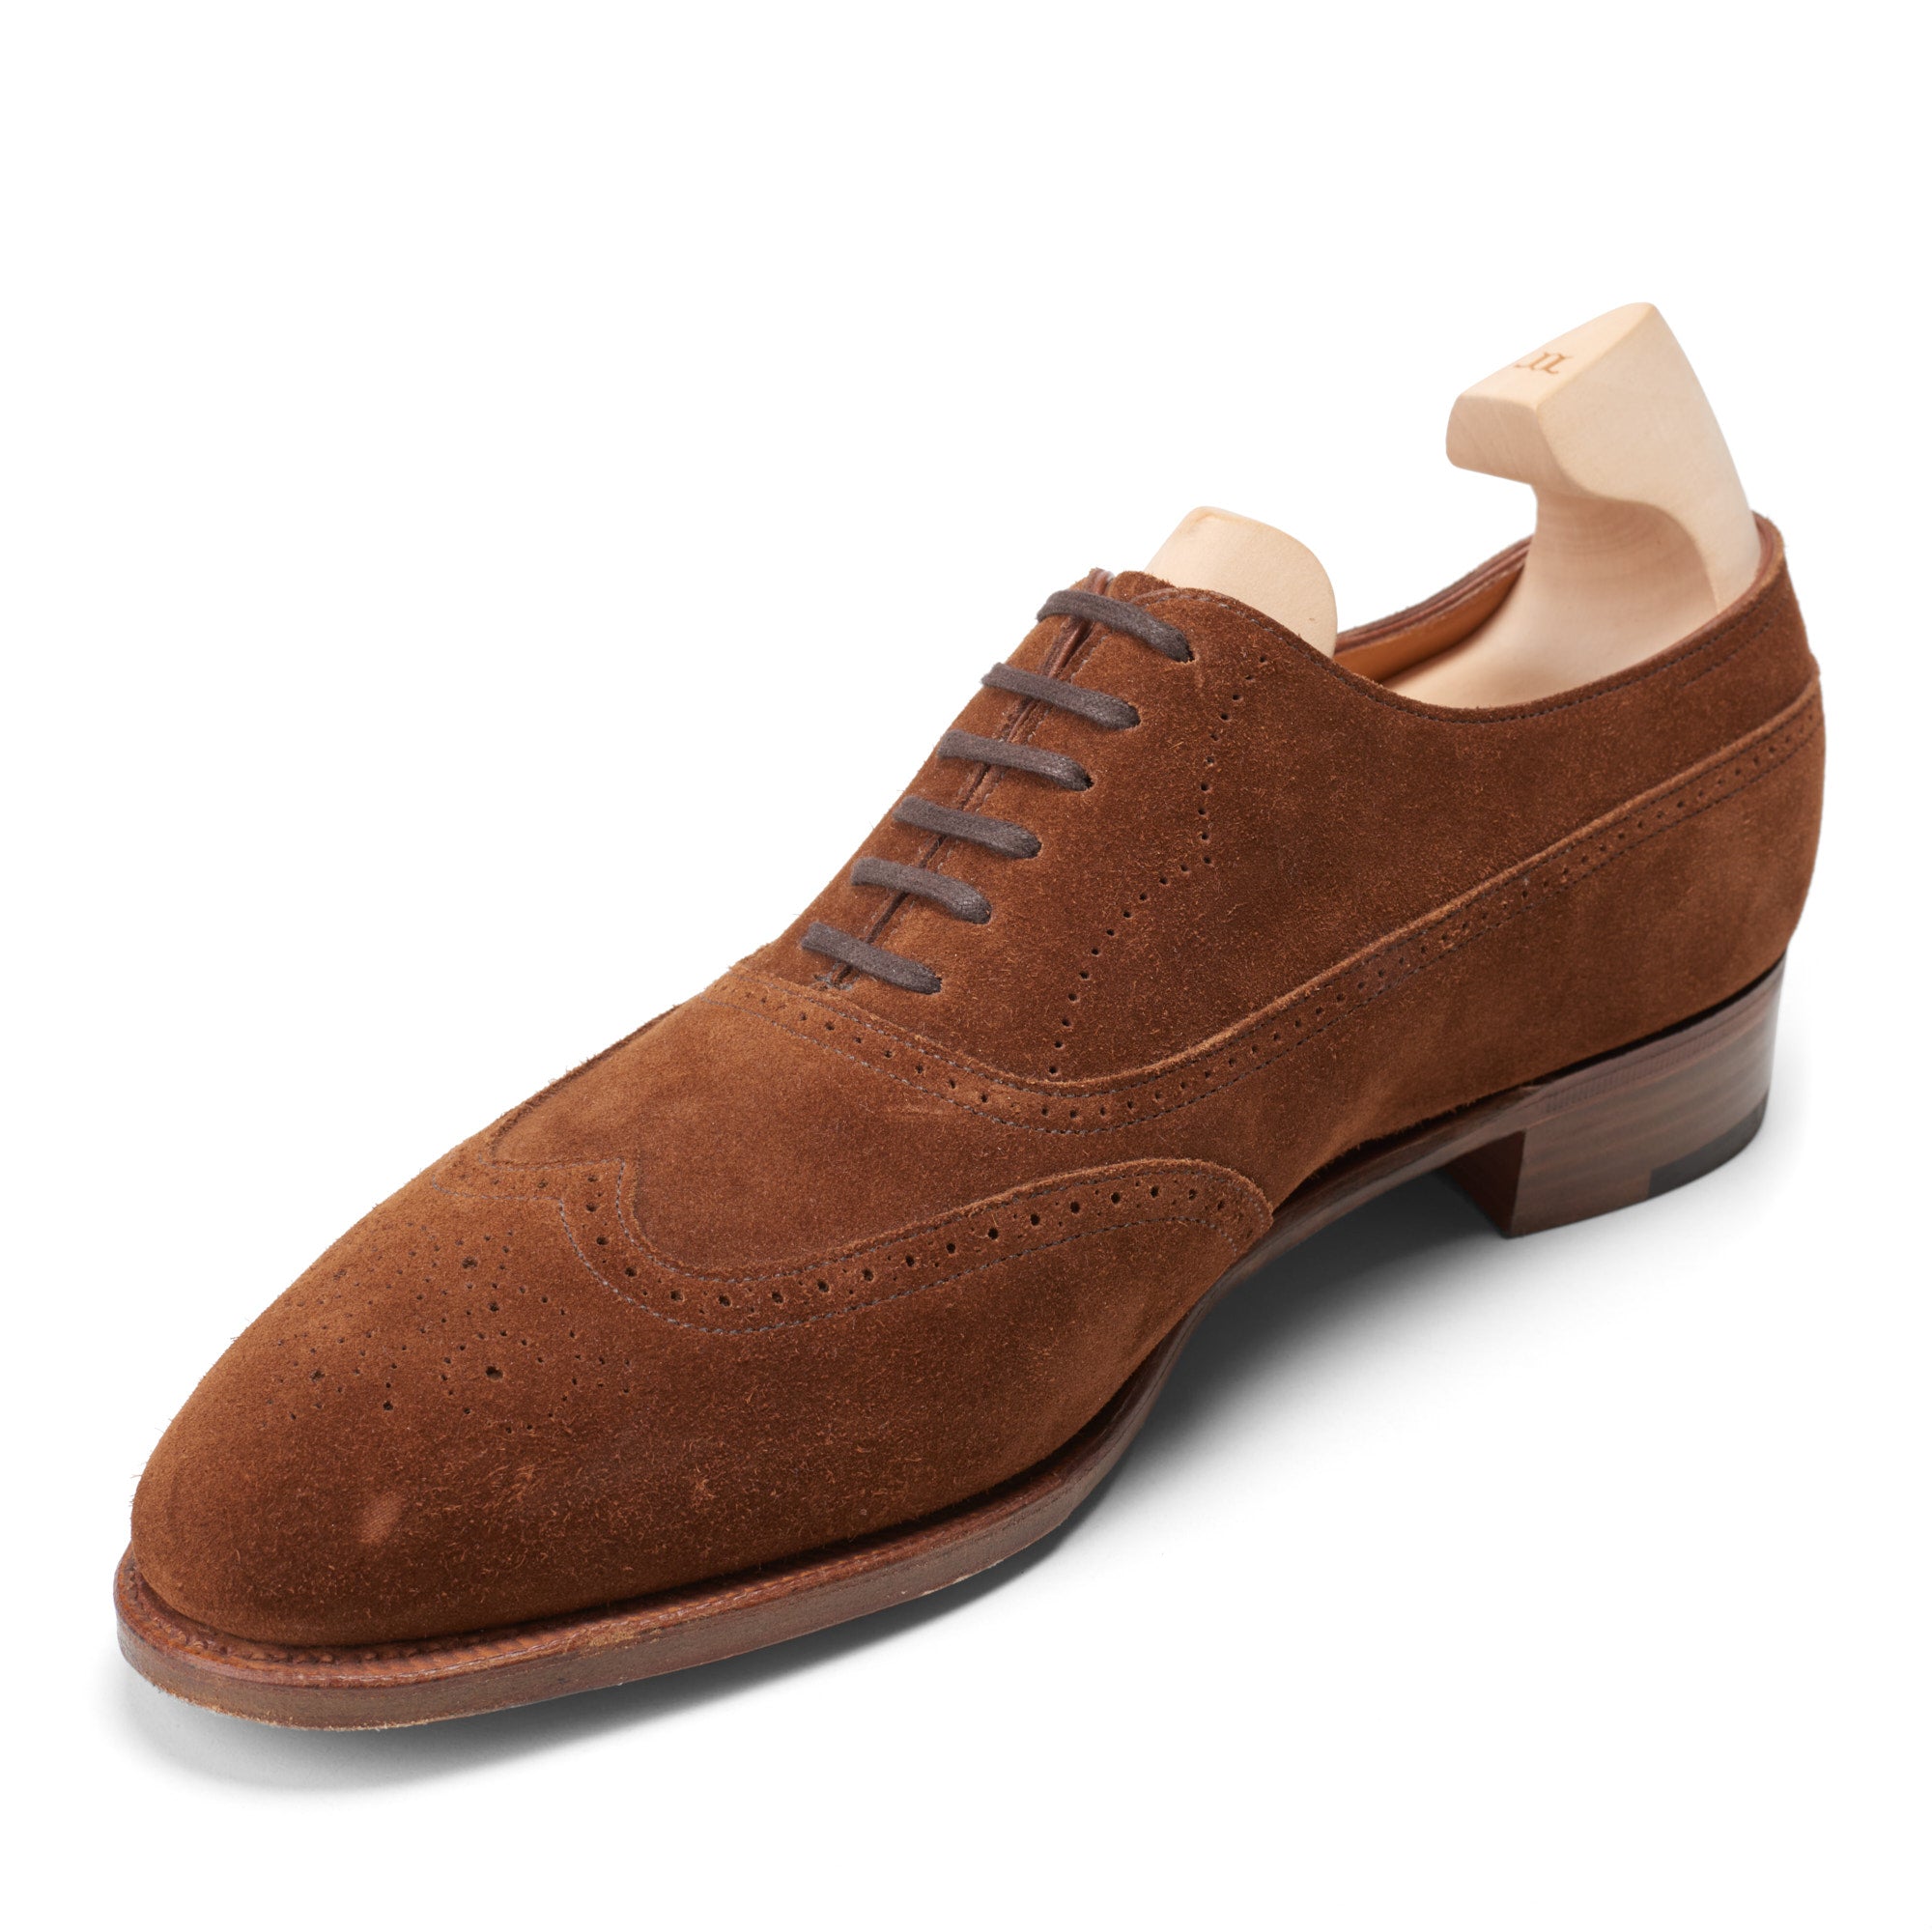 JOHN LOBB By REQUEST "Cavendish" Suede Oxford Shoes UK 7.5E US 8.5 Last 7000